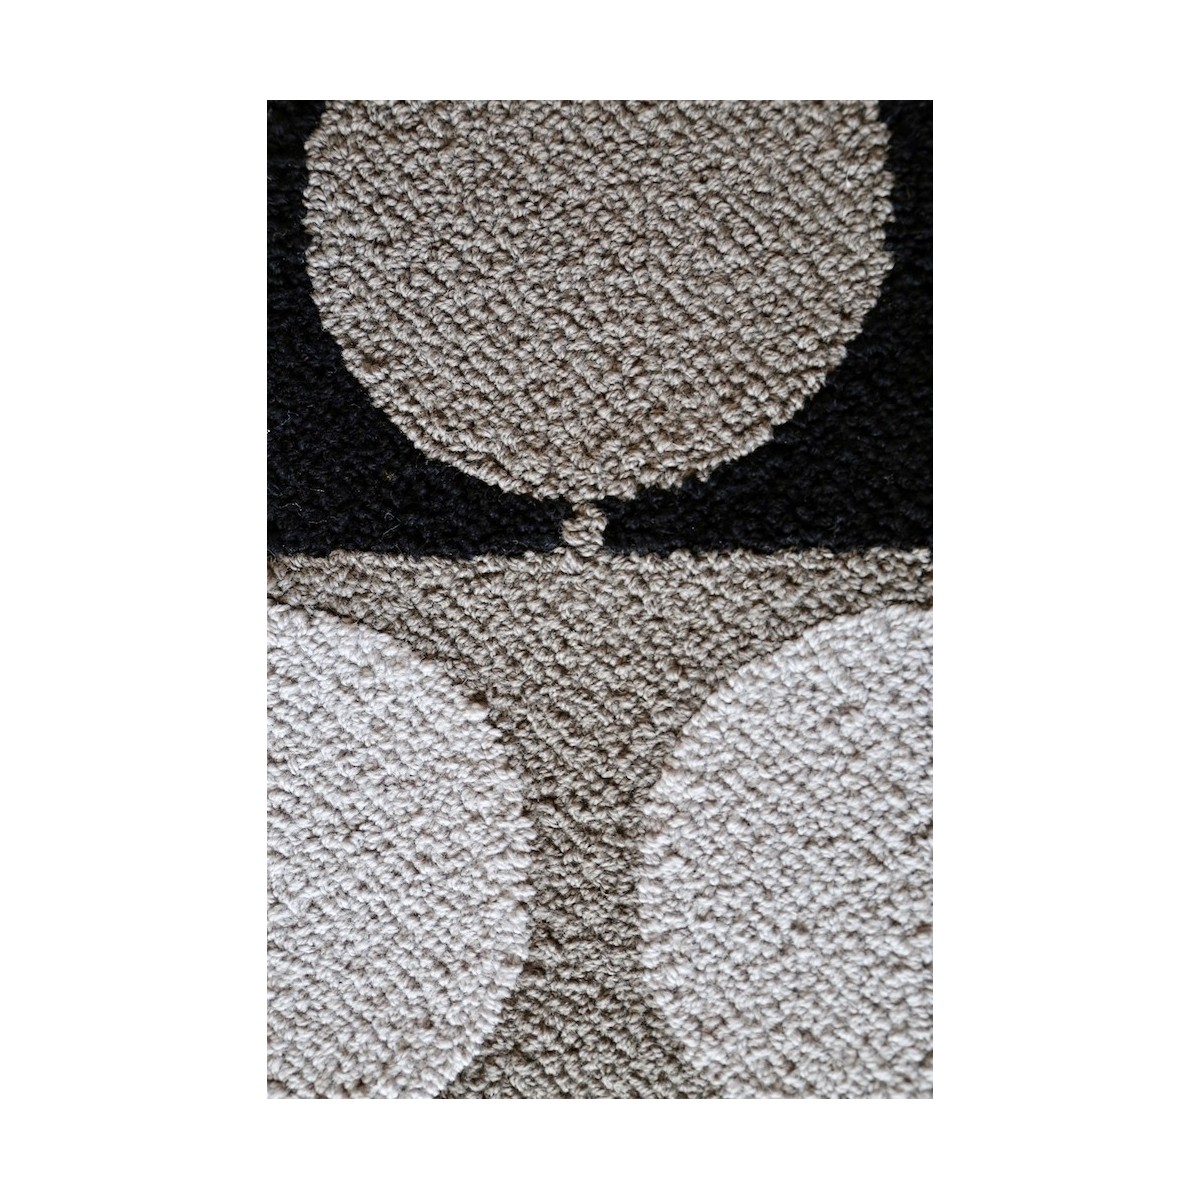 175x175 cm - grey/black - Circle rug